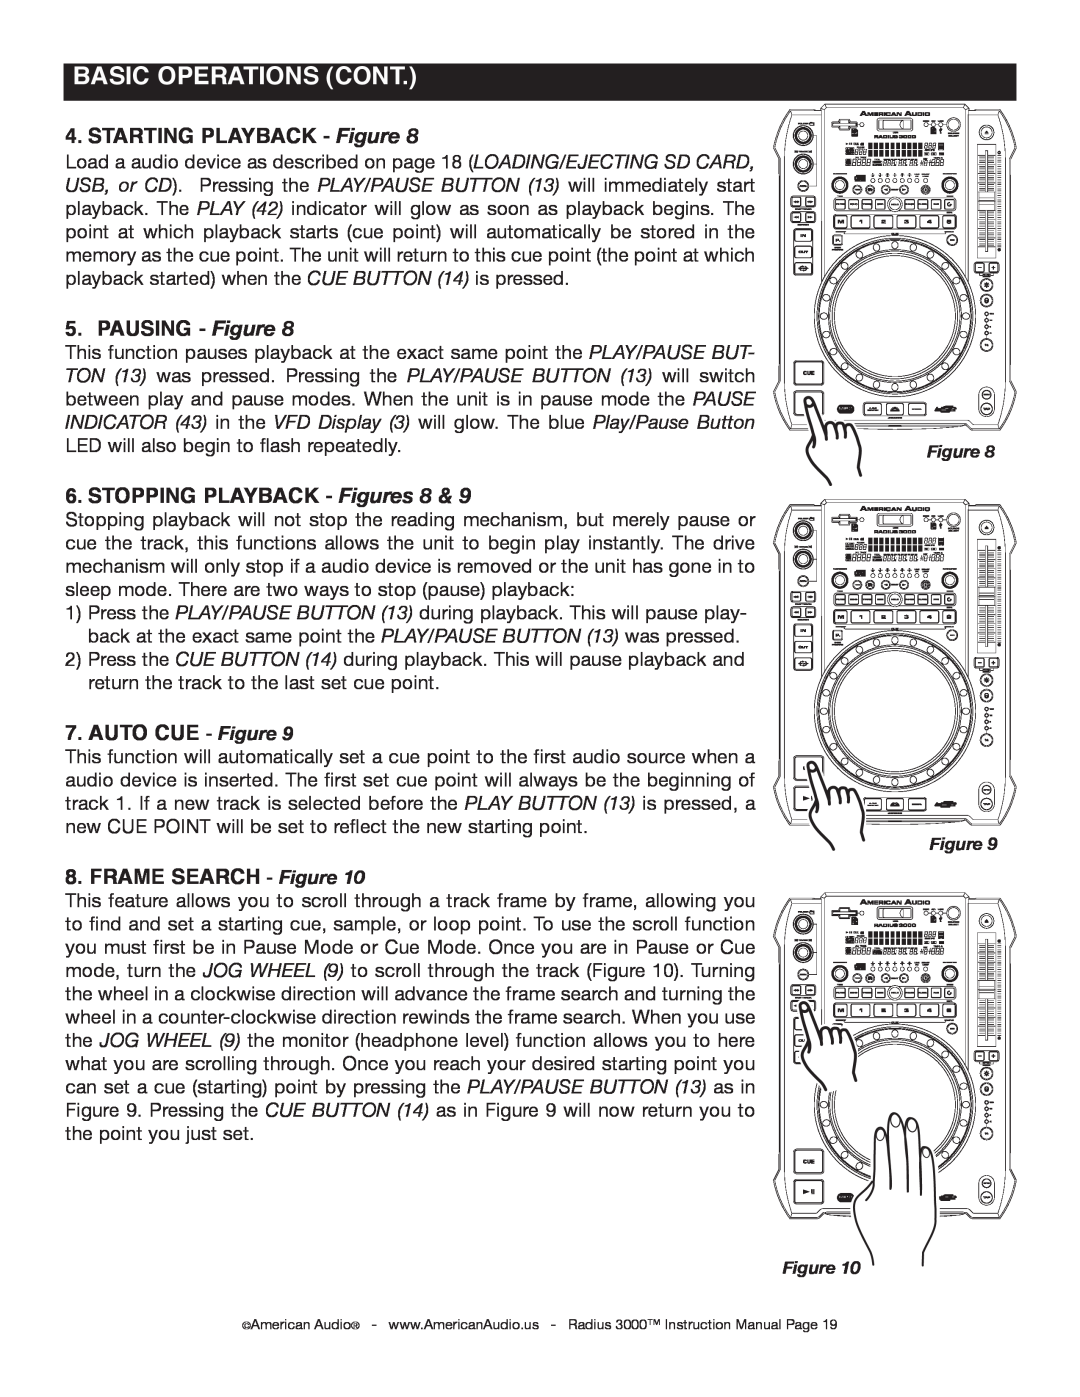 American Audio Radius 3000 manual BASIC OPERATIONS Cont, STARTING PLAYBACK - Figure, Pausing - Figure, Auto cue - Figure 